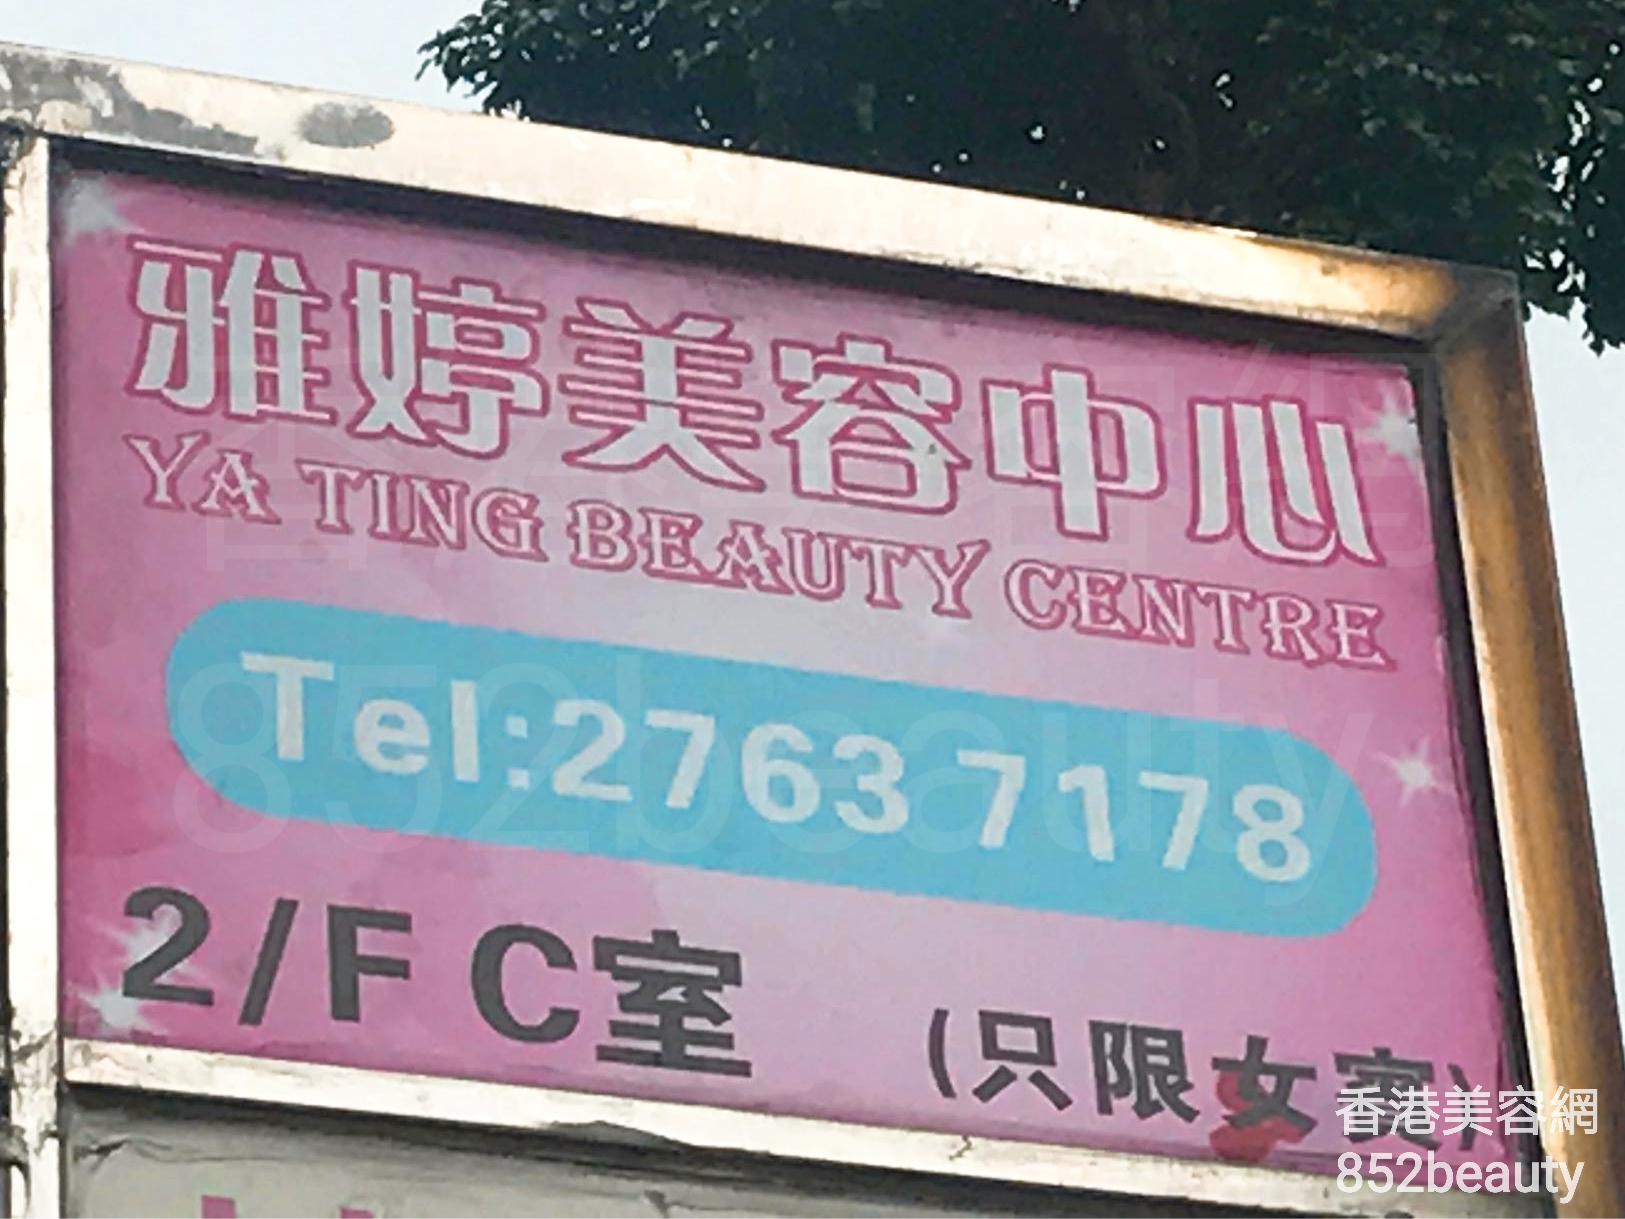 Eyelashes: 雅婷美容中心 Ya Ting Beauty Centre